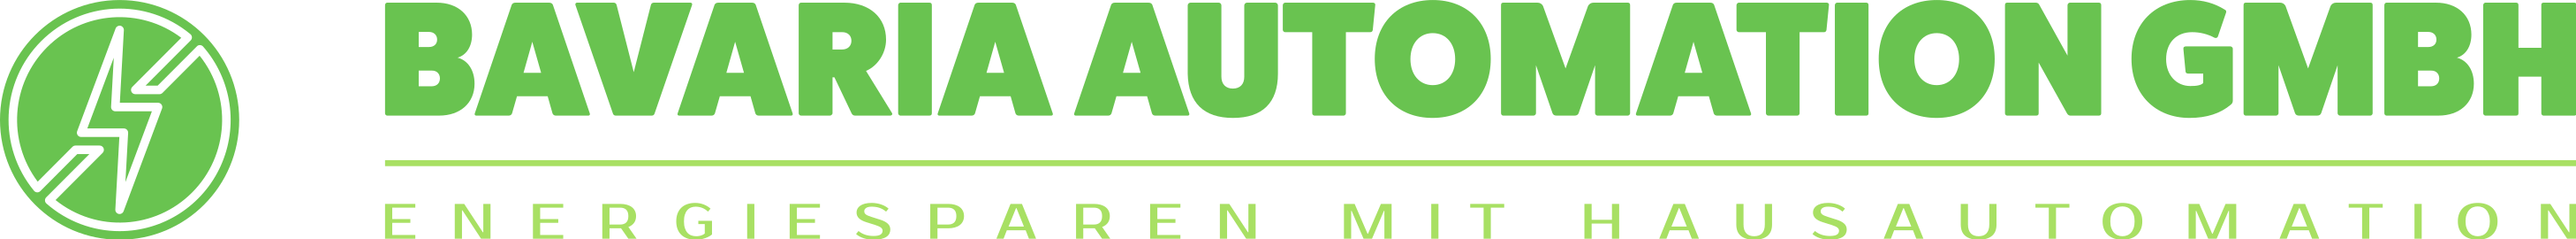 Bavaria Automation GmbH 